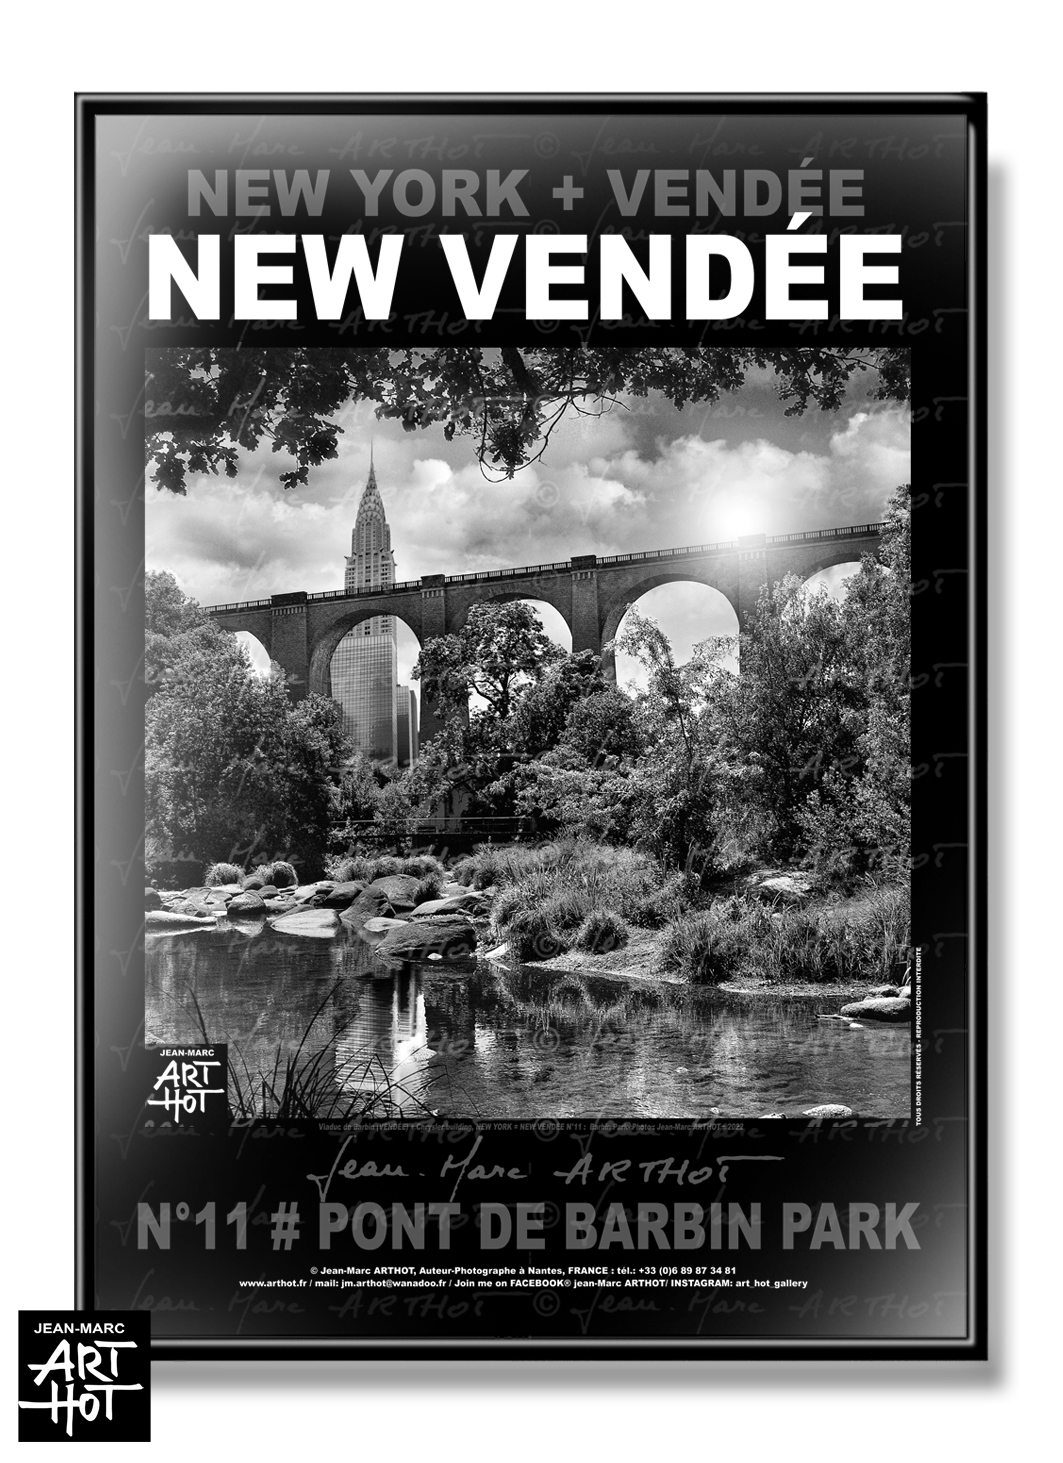 arthot-photo-art-b&amp;w-new-york-vendee-newvendee-011-saint-laurent-sur-sevre-viaduc-barbin-rivière-train-AFF